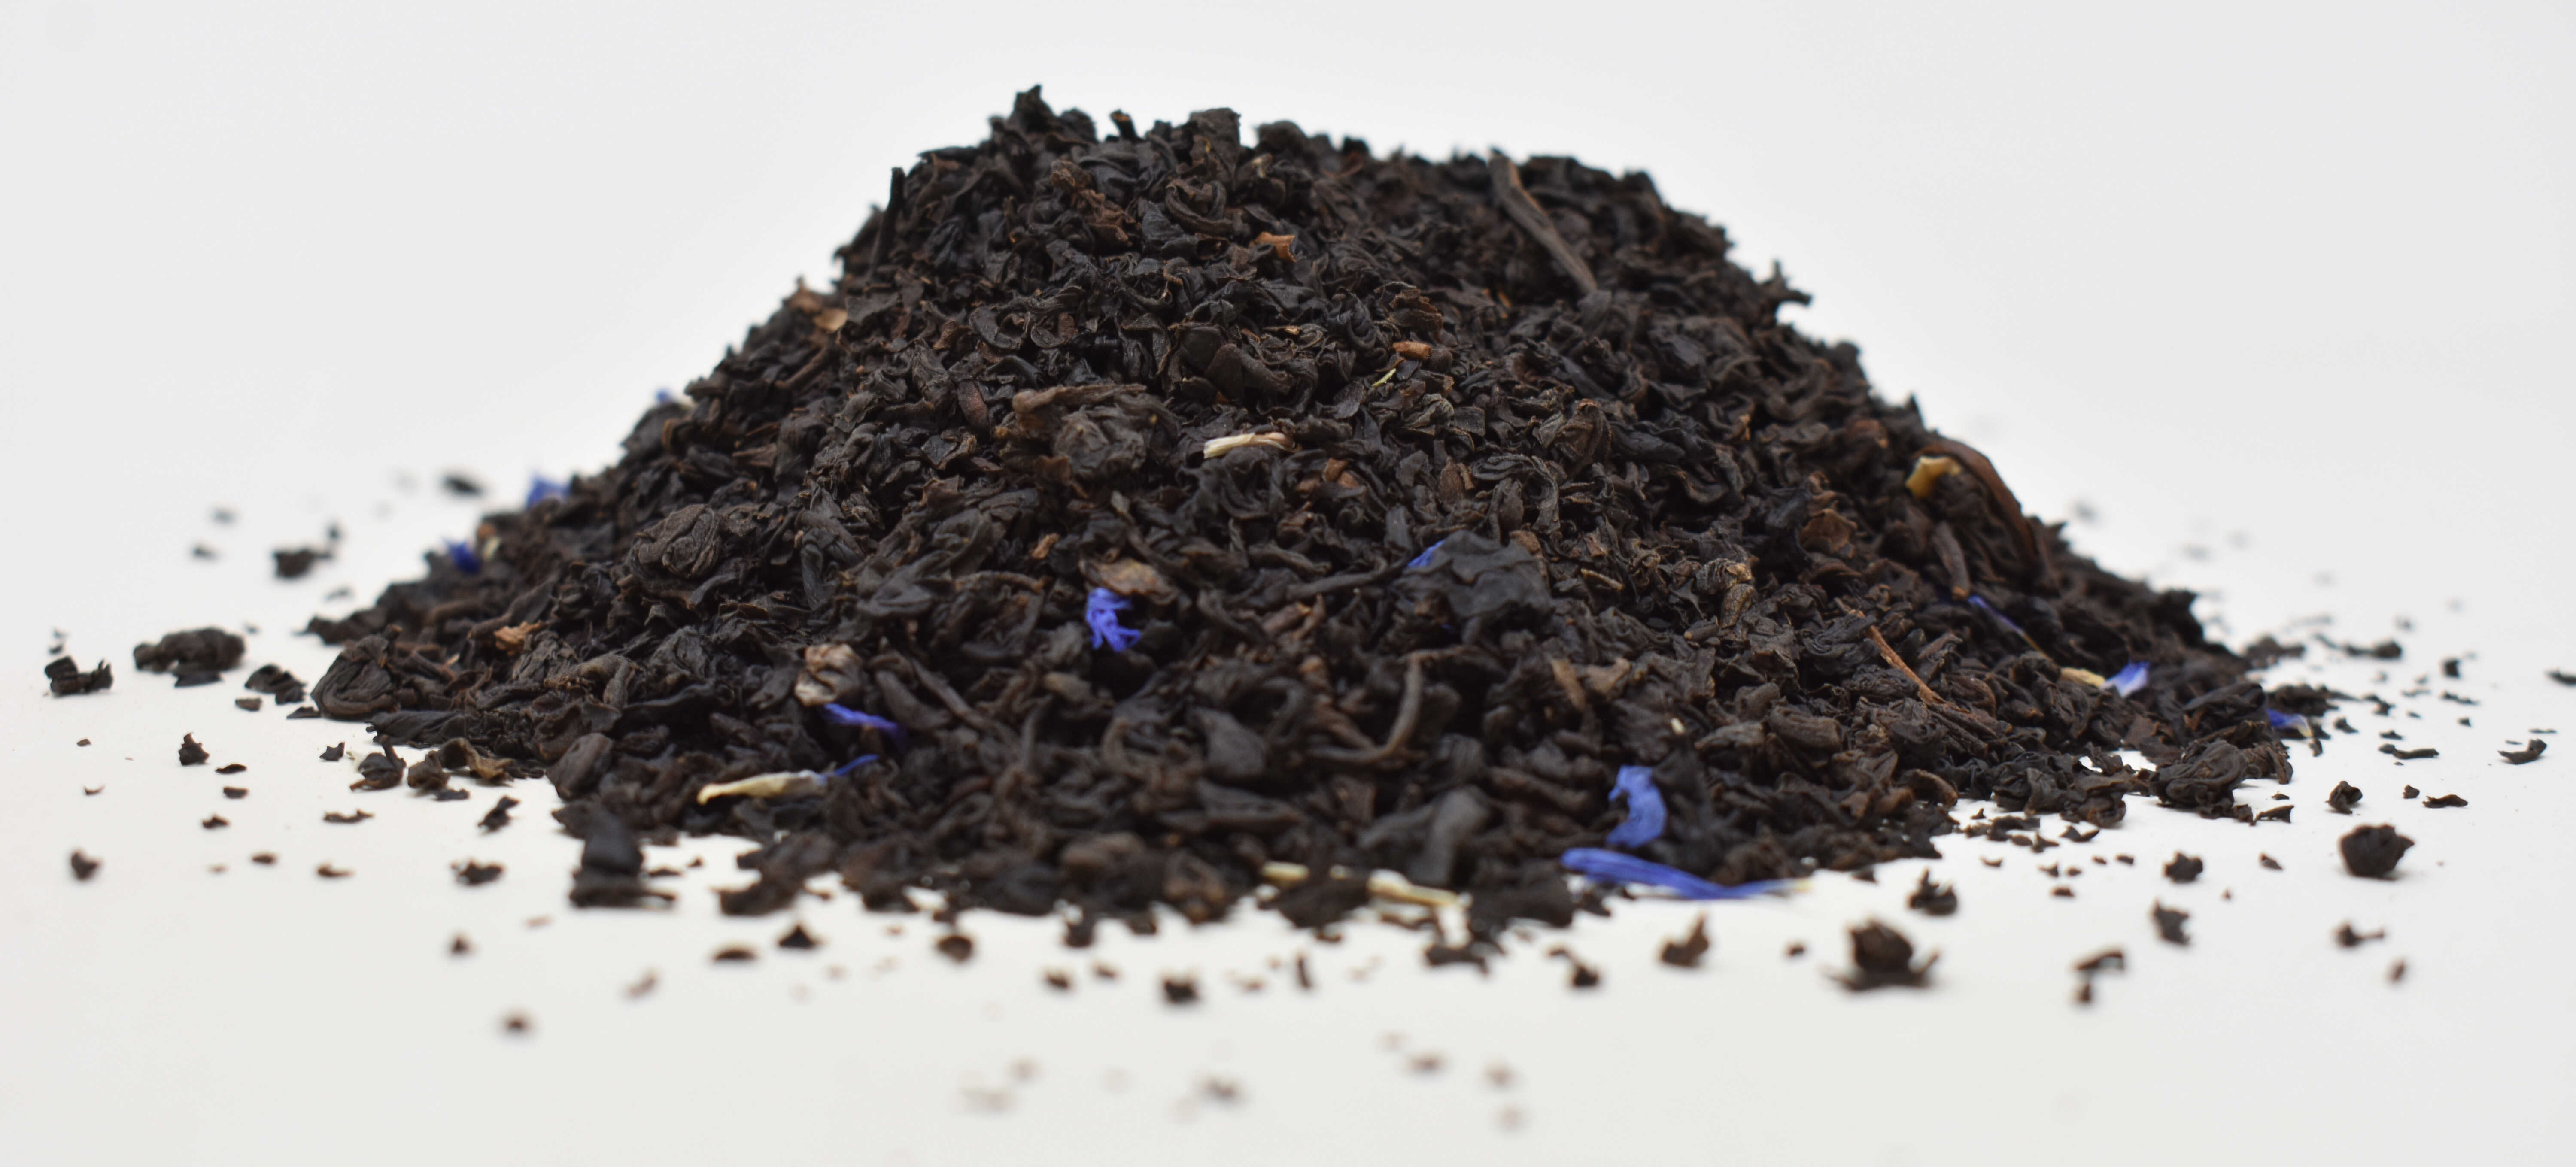 Black Currant Decaf Black Tea - Side Photo